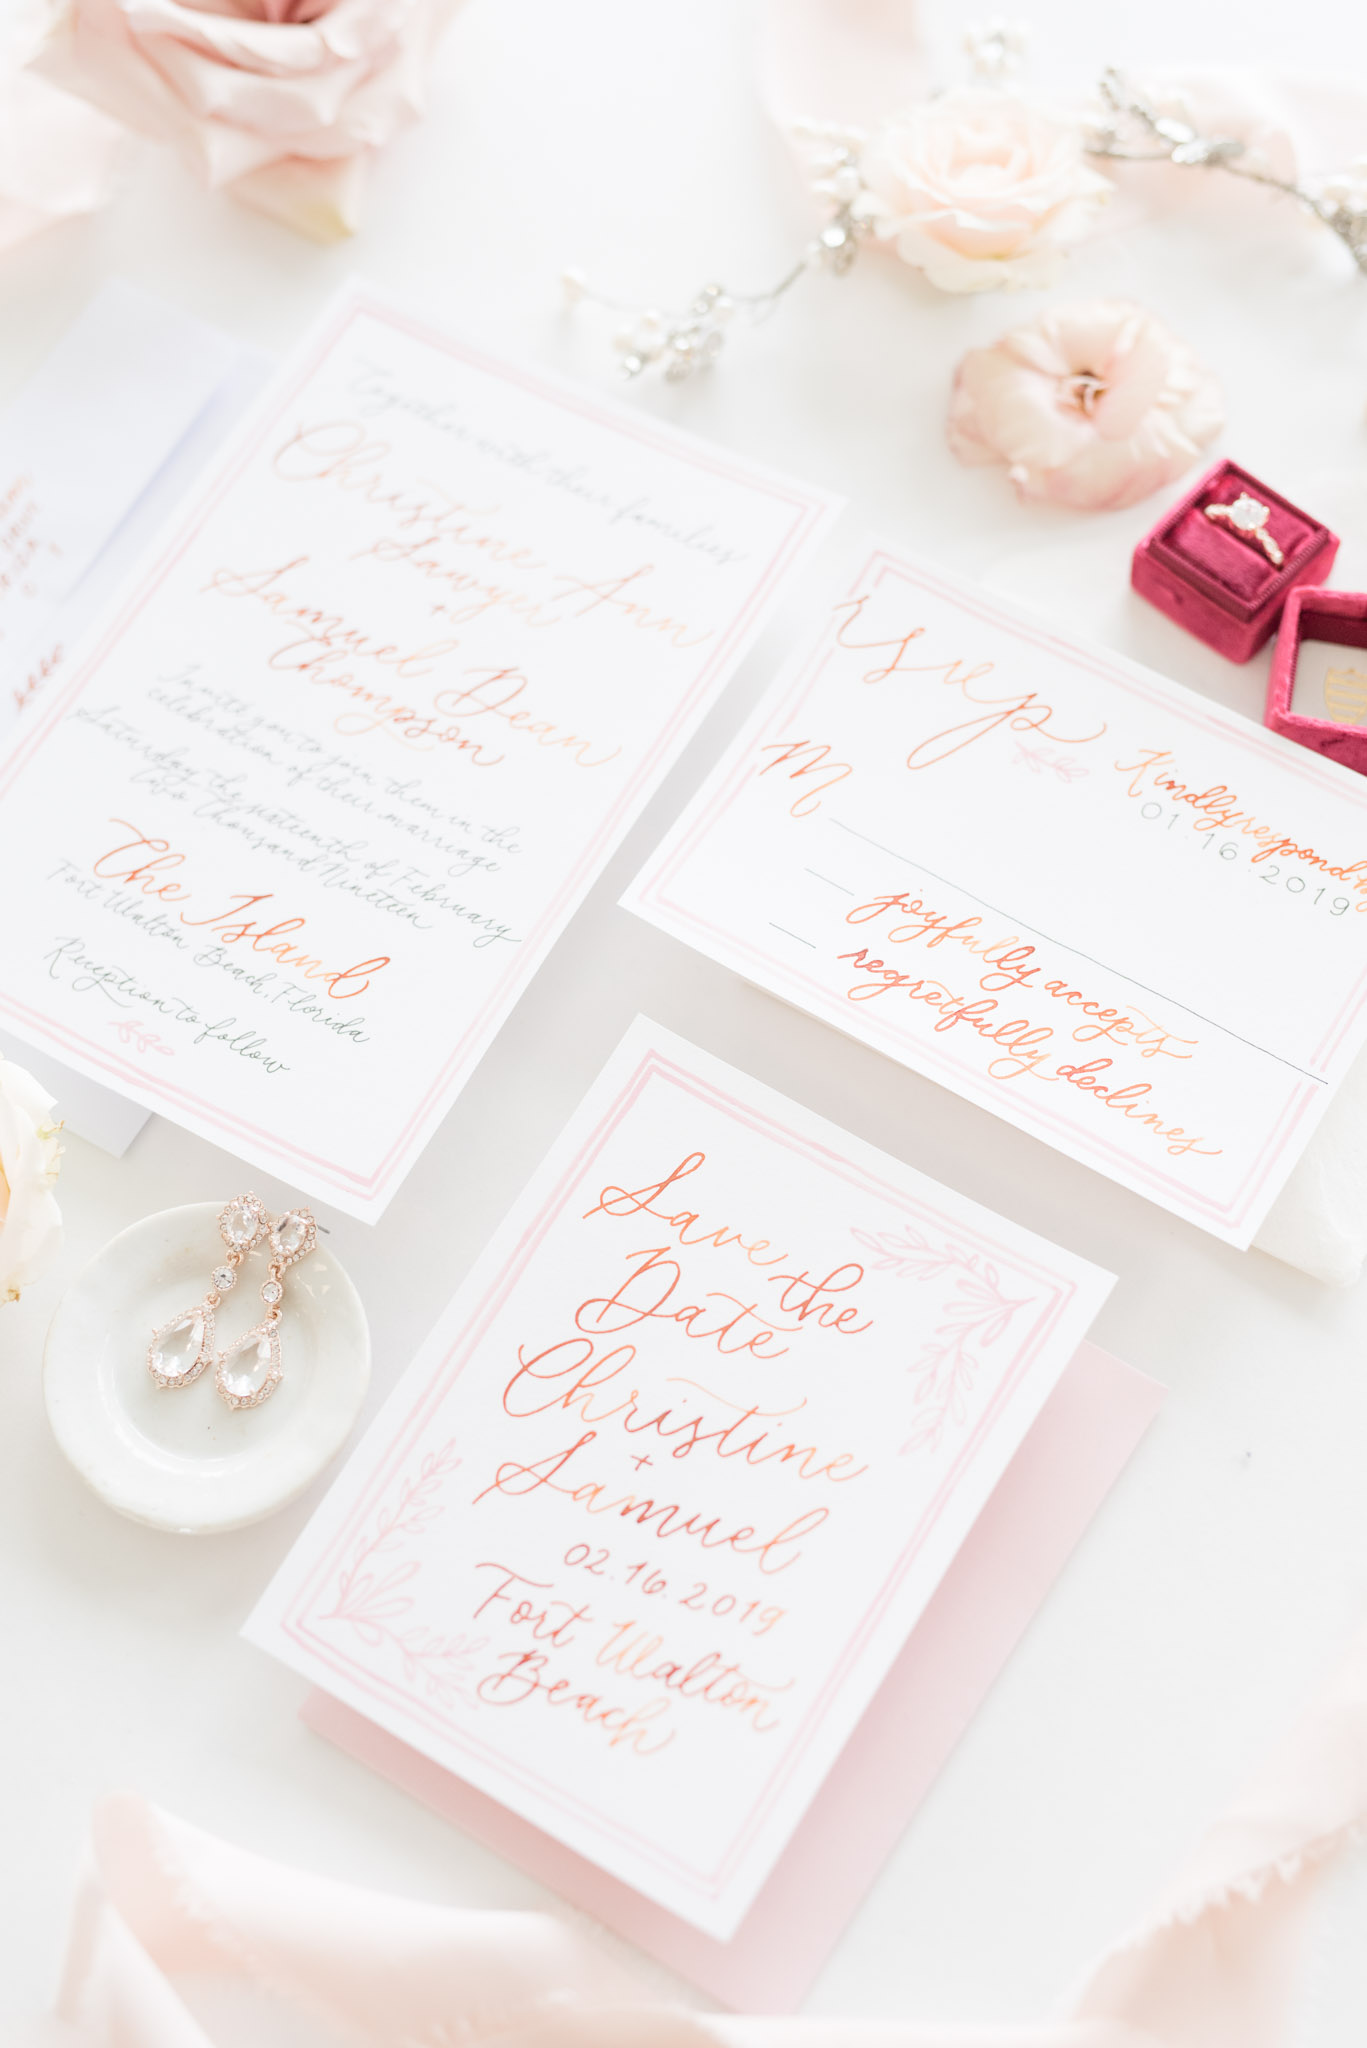 White and blush wedding invitation.